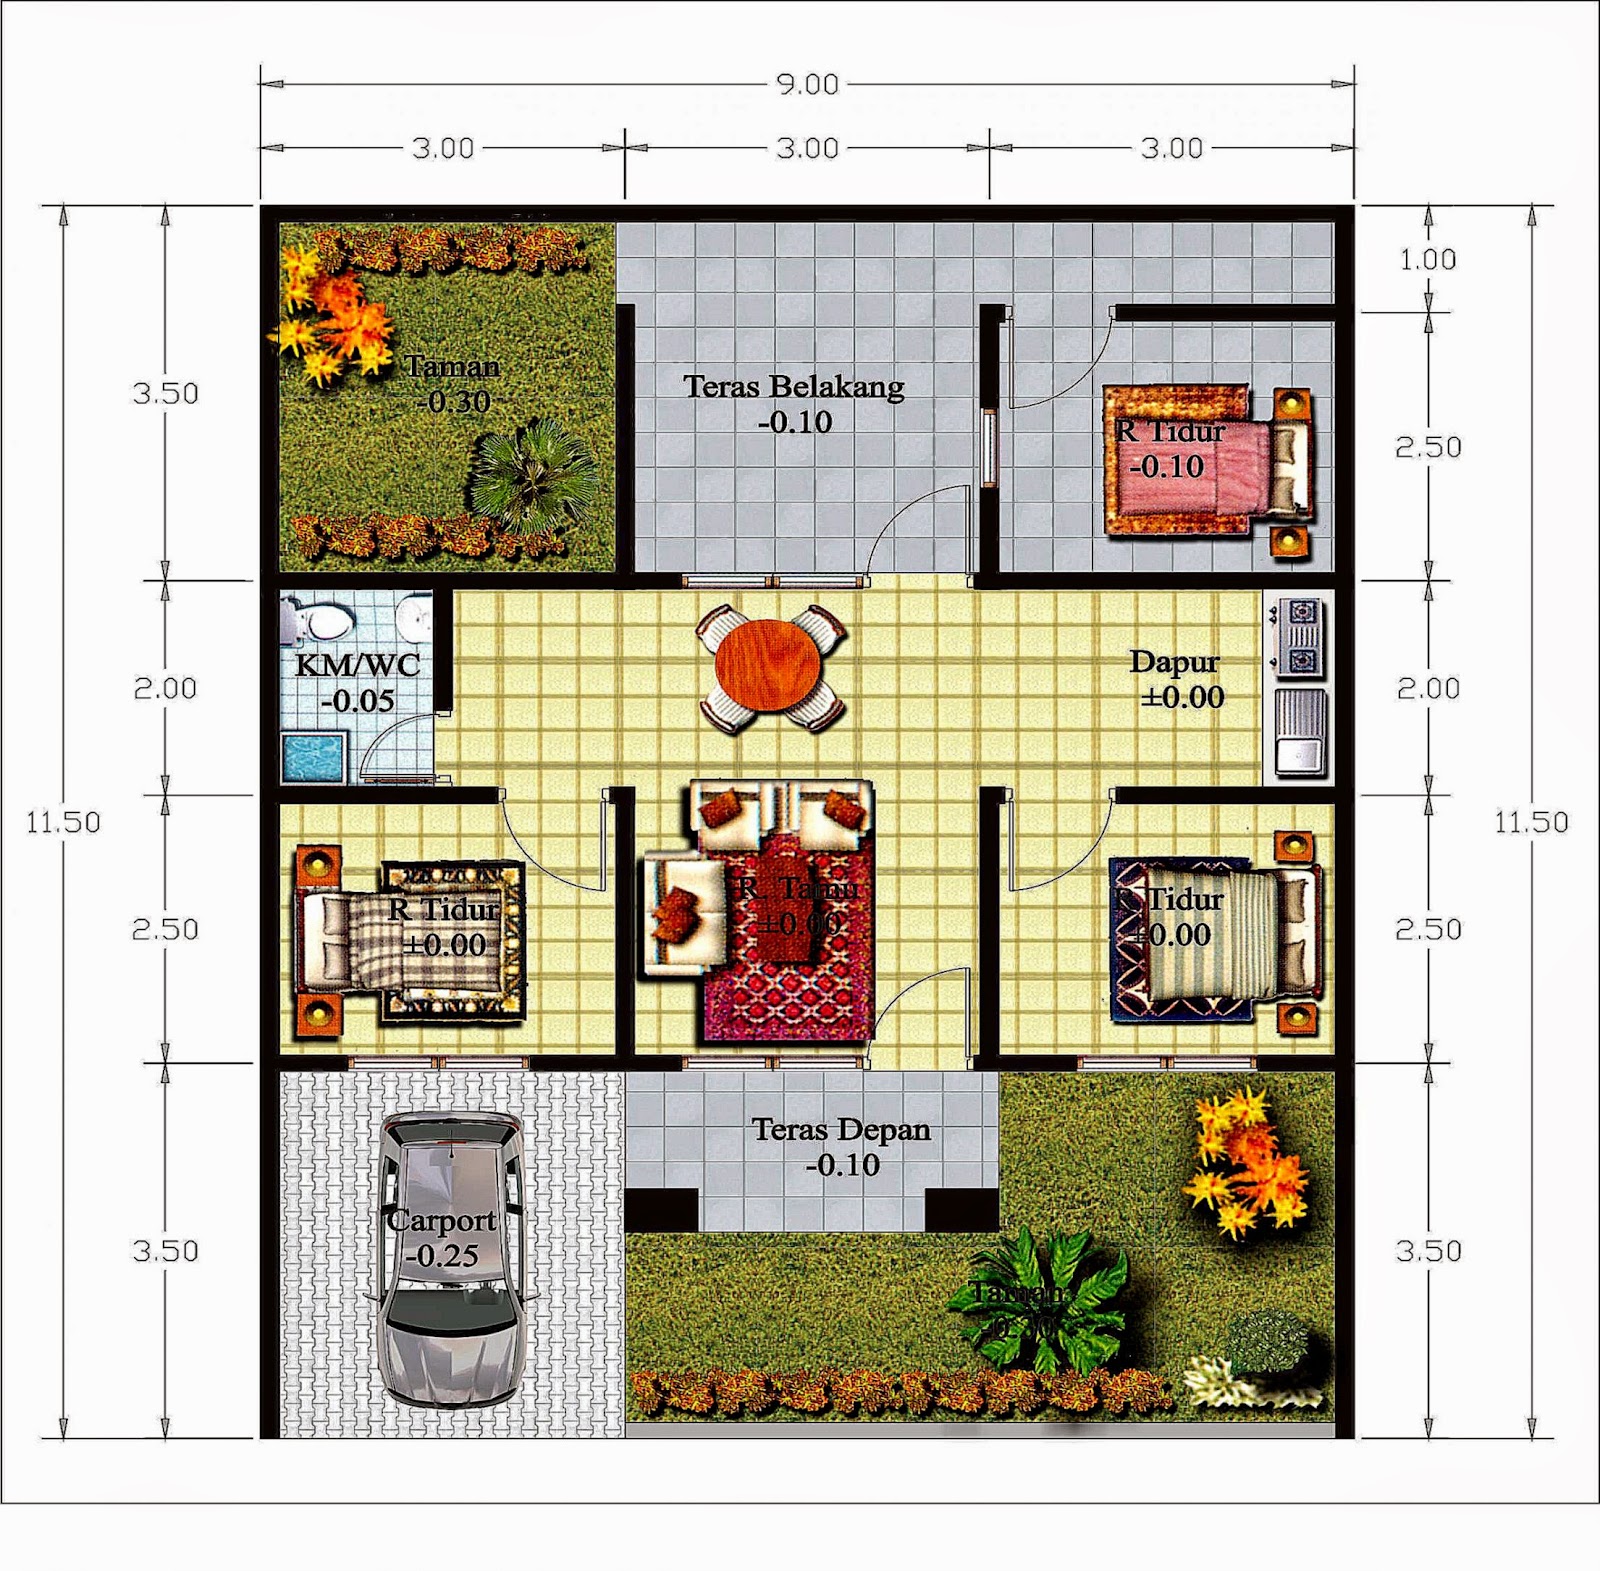 33 Denah  Rumah  Minimalis Sederhana  6x9  Inspirasi Terbaru 